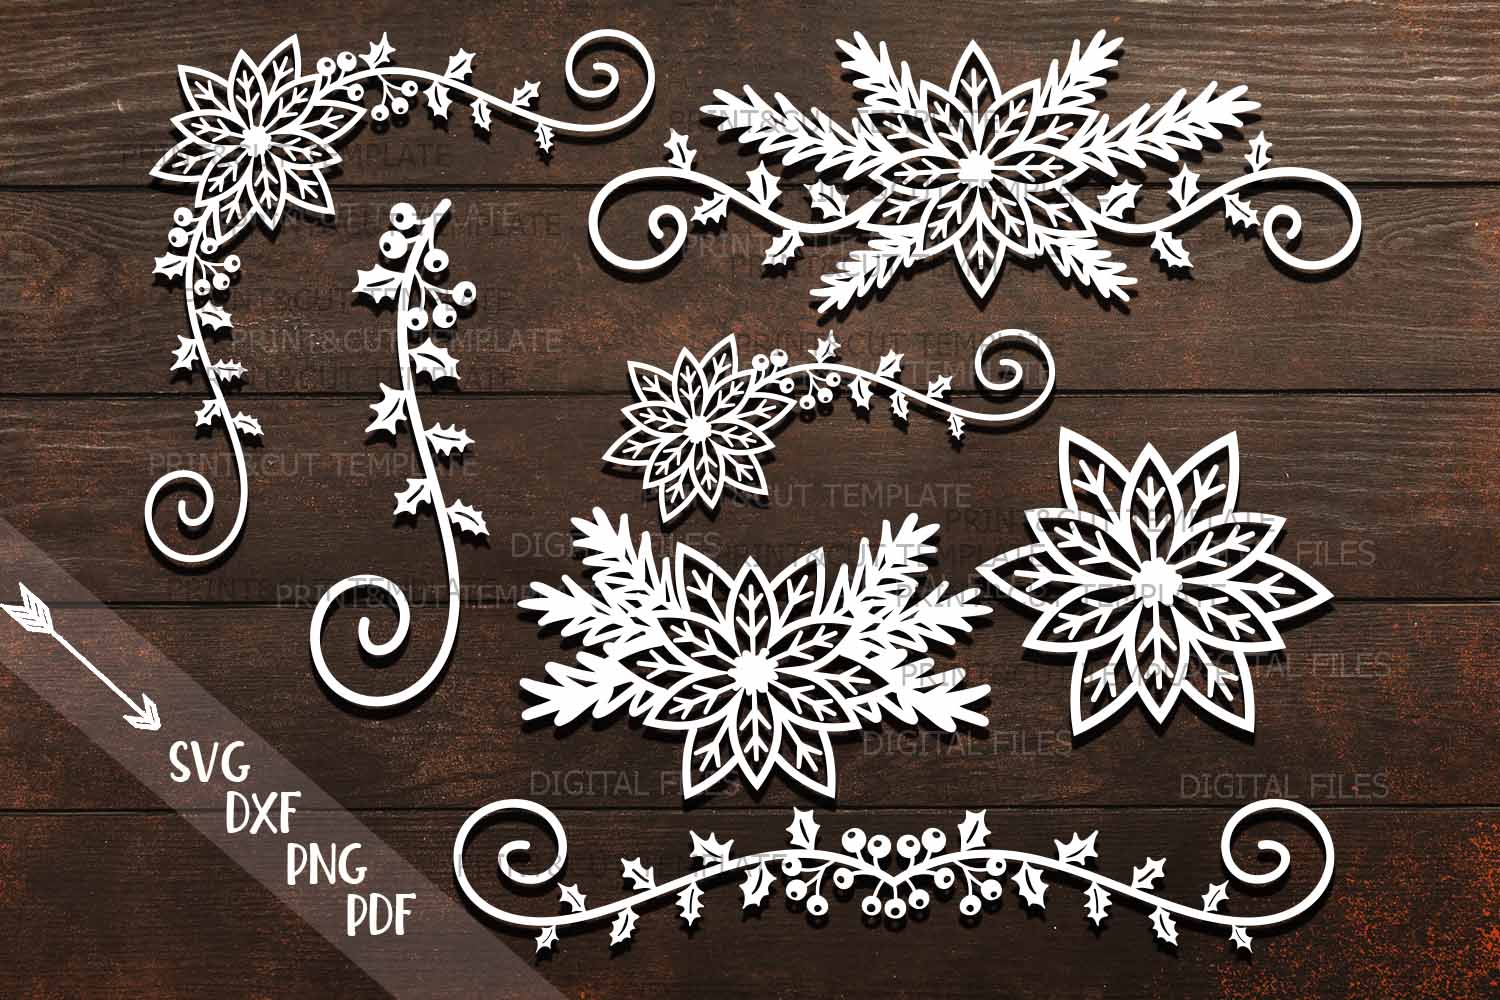 Download Poinsettia Christmas border swirls decorations paper cut svg (156682) | Paper Cutting | Design ...